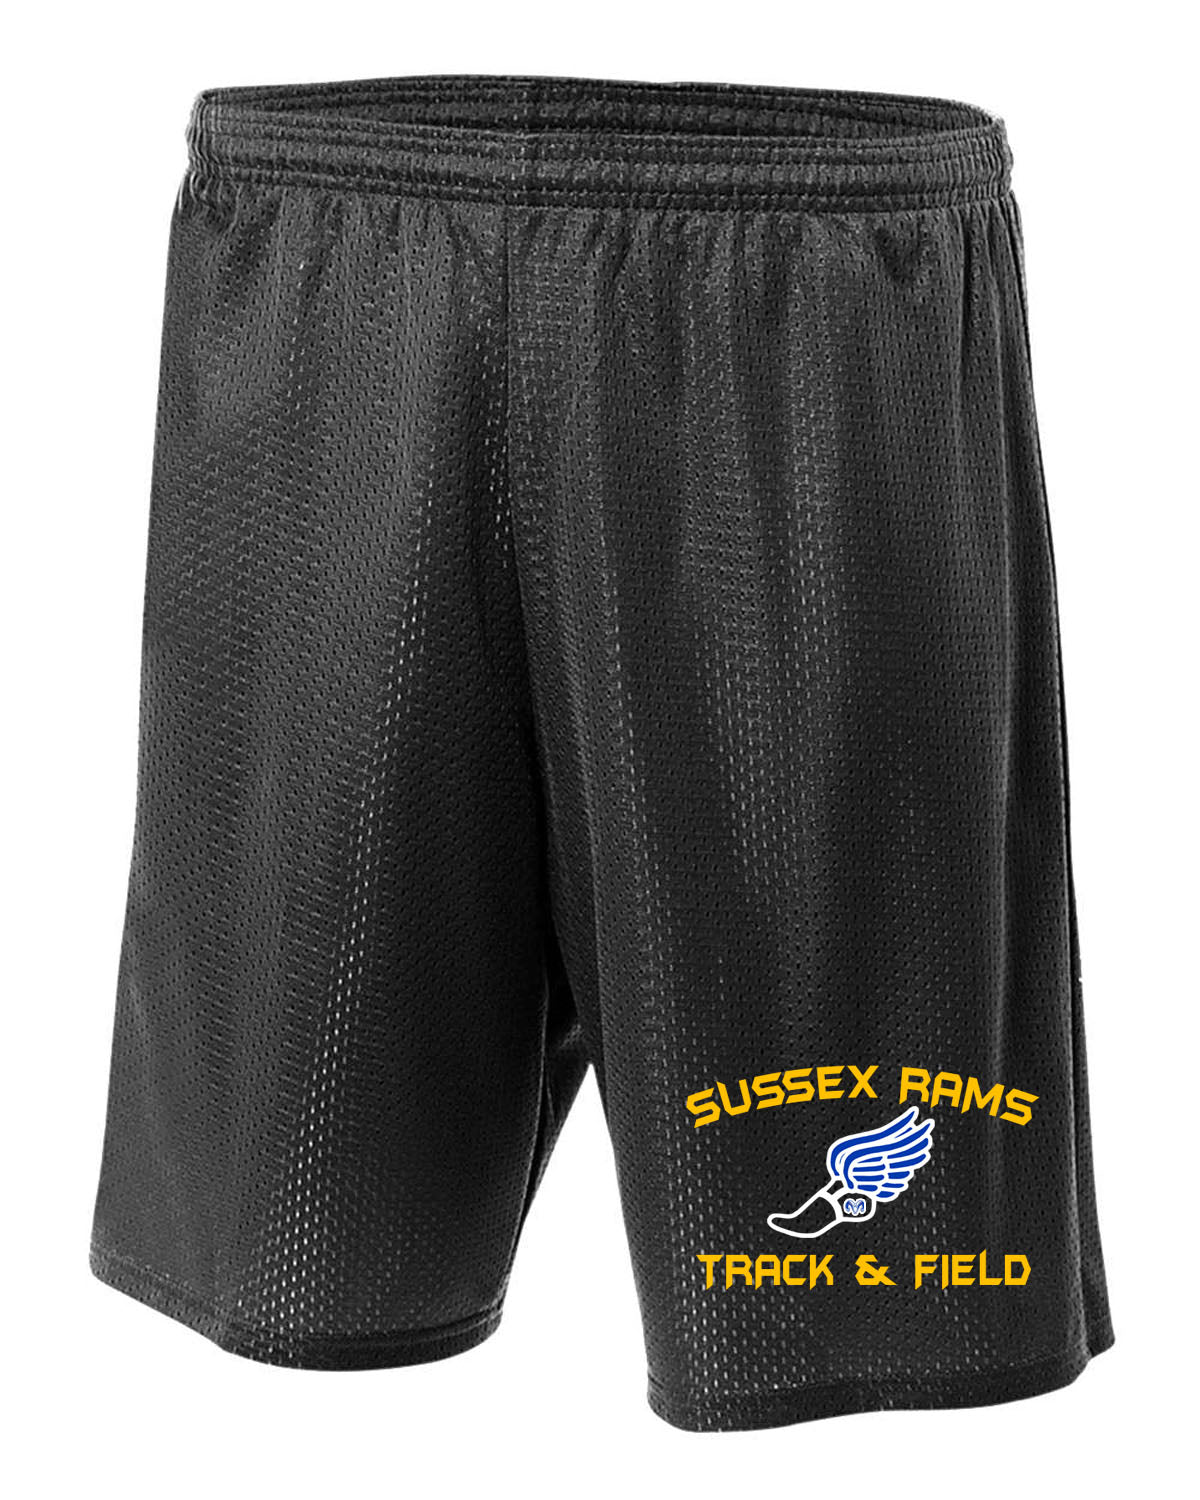 Sussex Rams Track Mesh Shorts Design 2